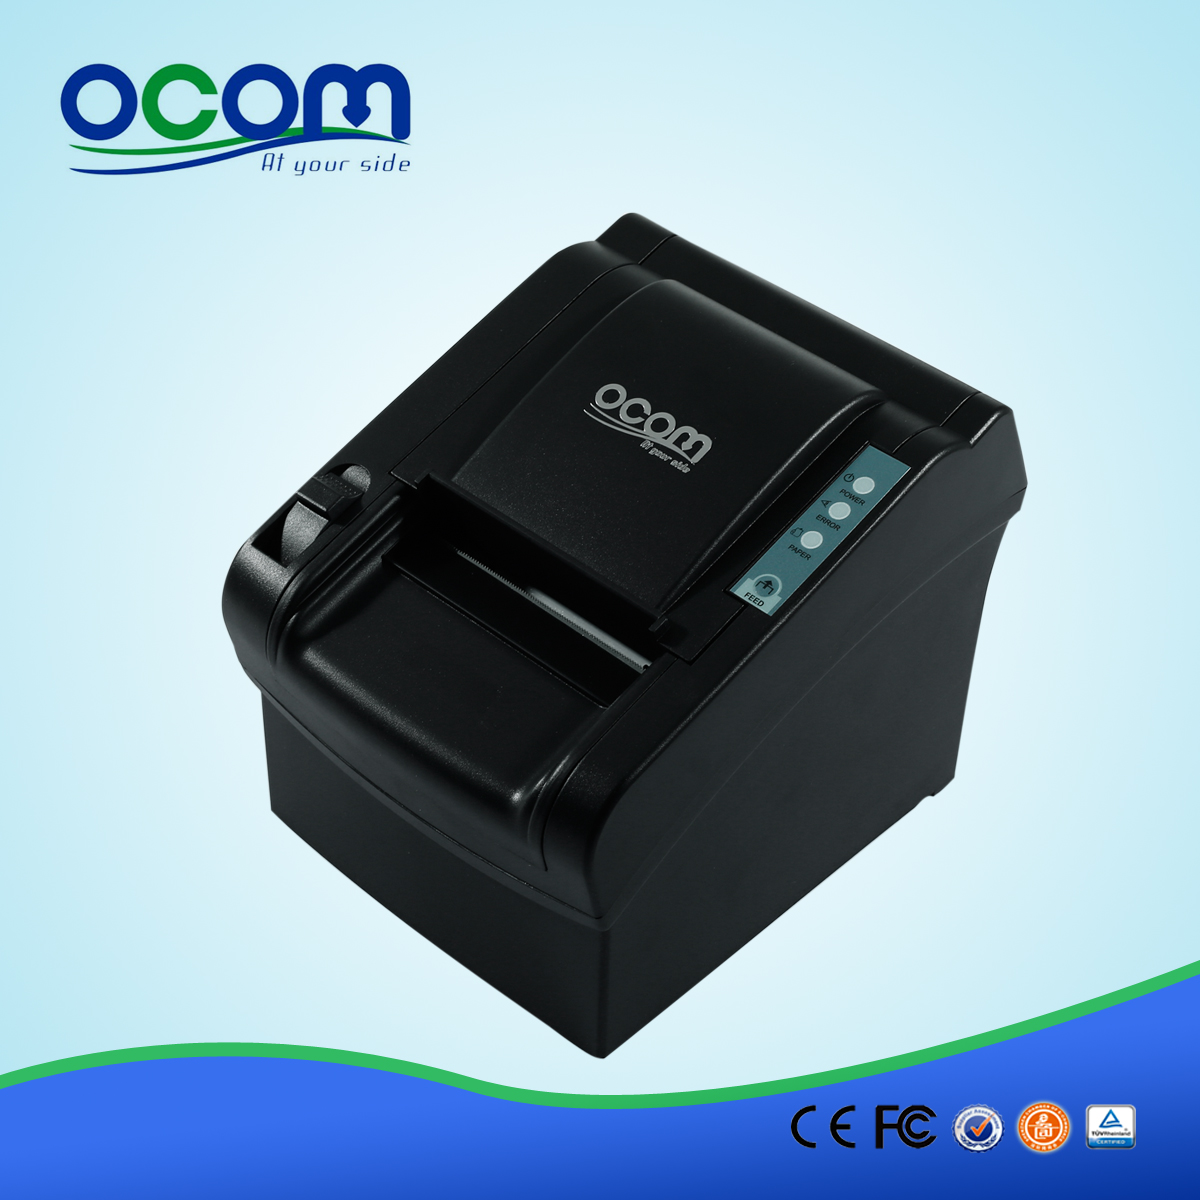 OCPP-802: su stampante di ricevute di posizione vendita, stampante termica per ricevute 80 millimetri